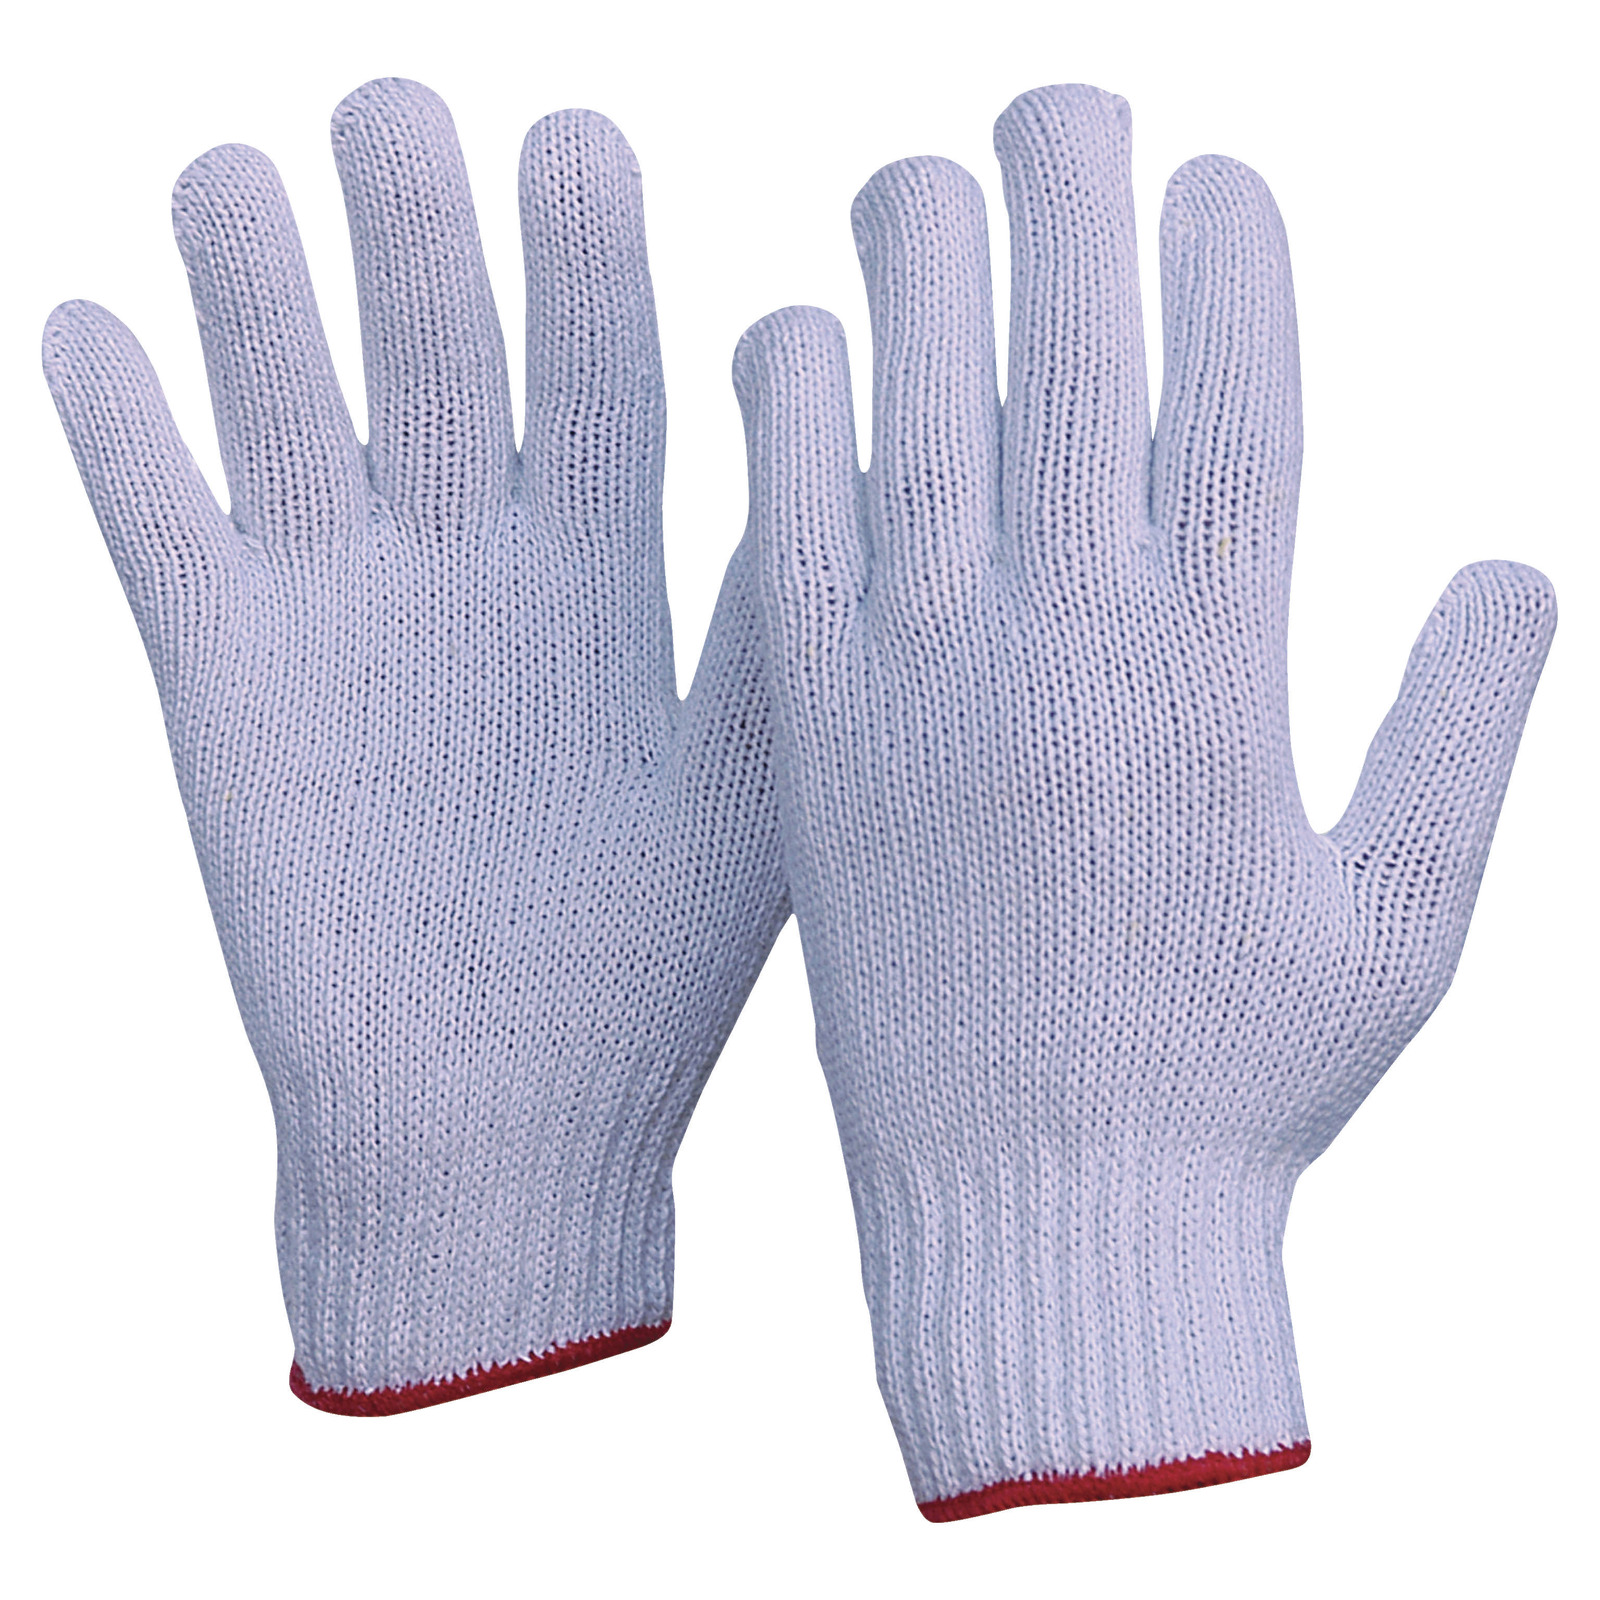 Polycotton Glove - Medium (12 pairs/pack)